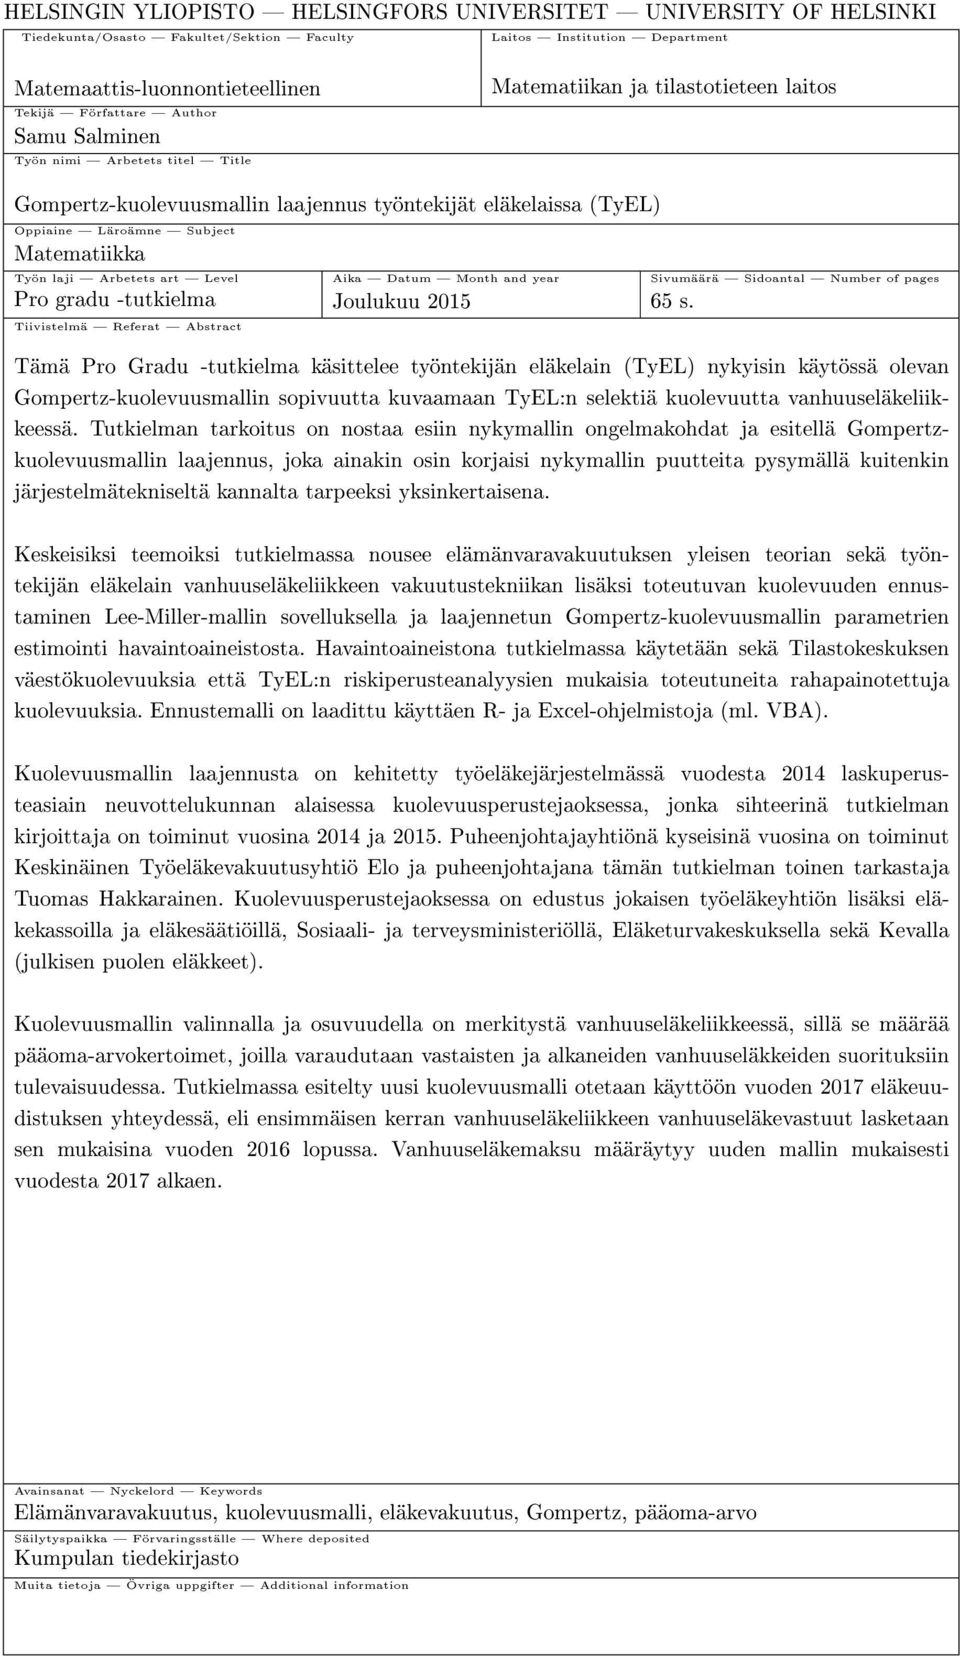 Arbetets art Level Aika Datum Month and year Sivumäärä Sidoantal Number of pages Pro gradu -tutkielma Joulukuu 05 65 s.